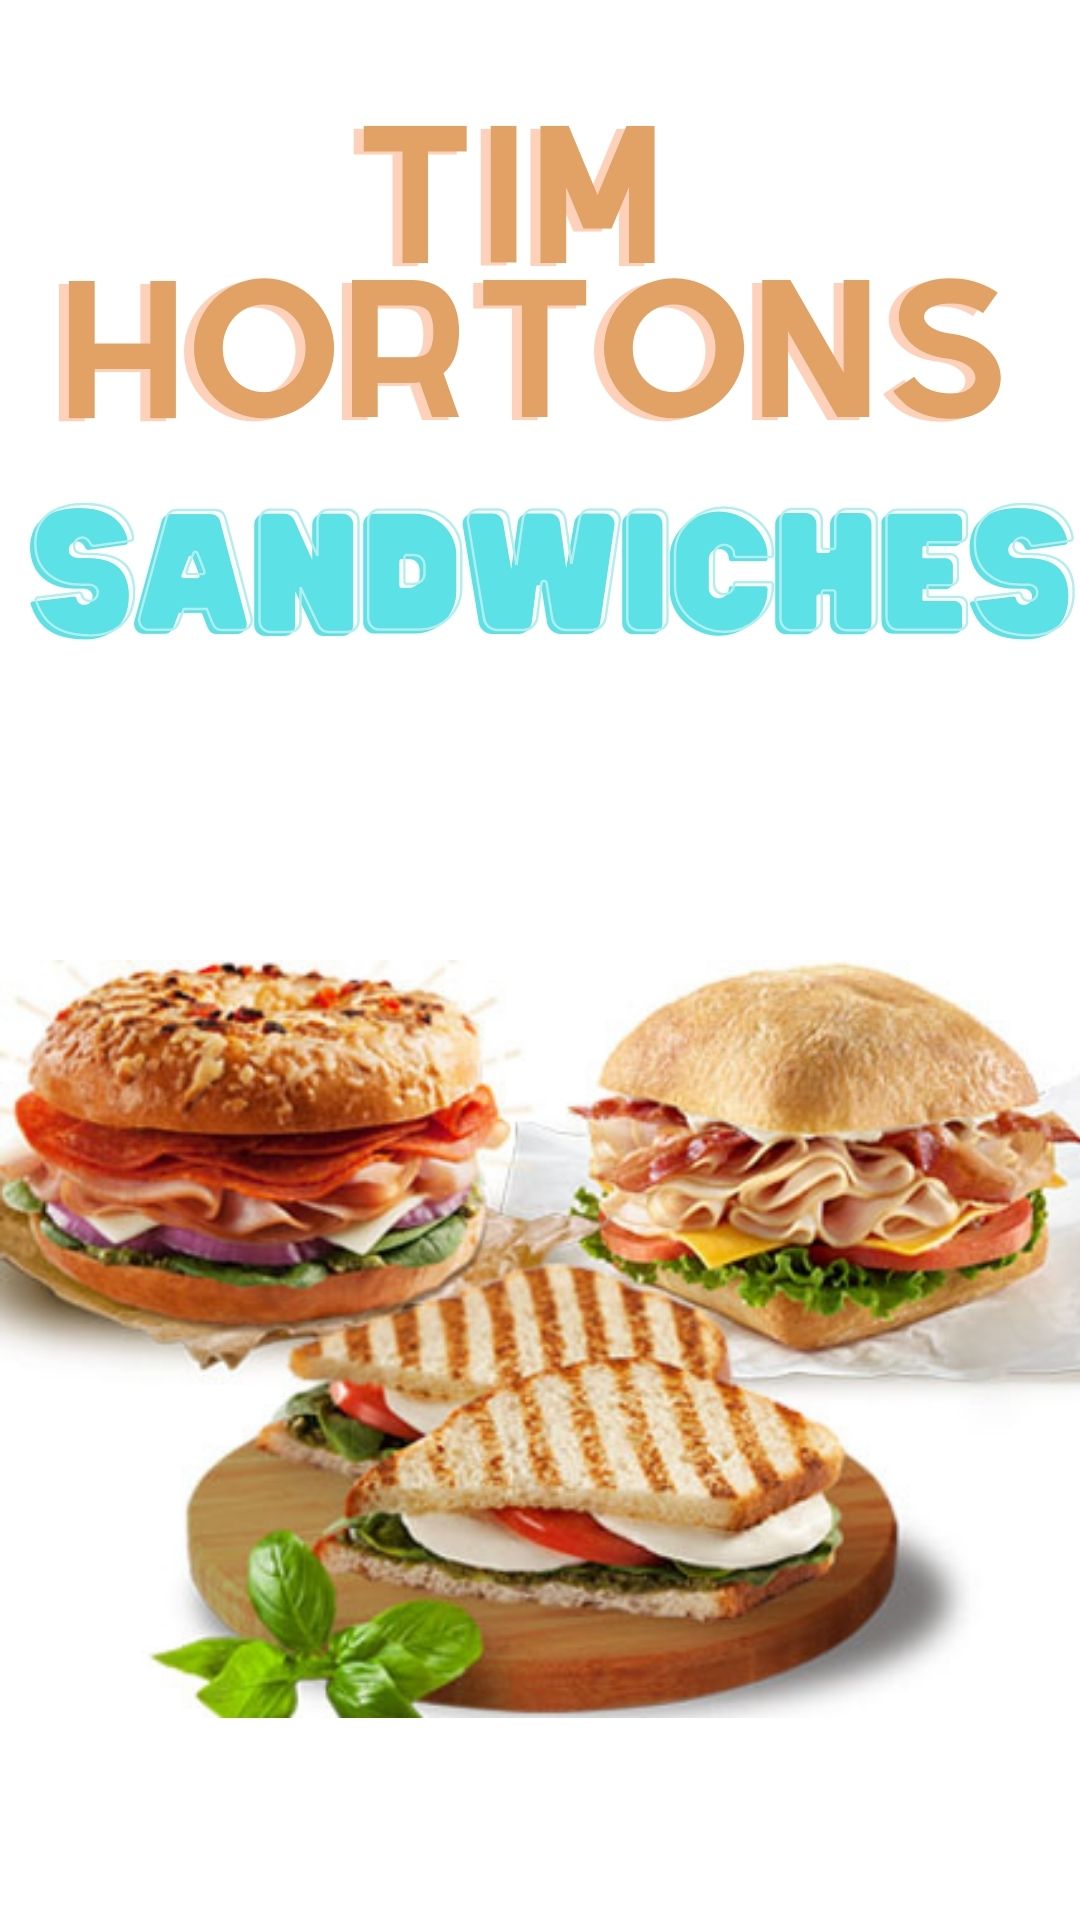 Tim Hortons upgrades breakfast sandwich, 2020-07-22